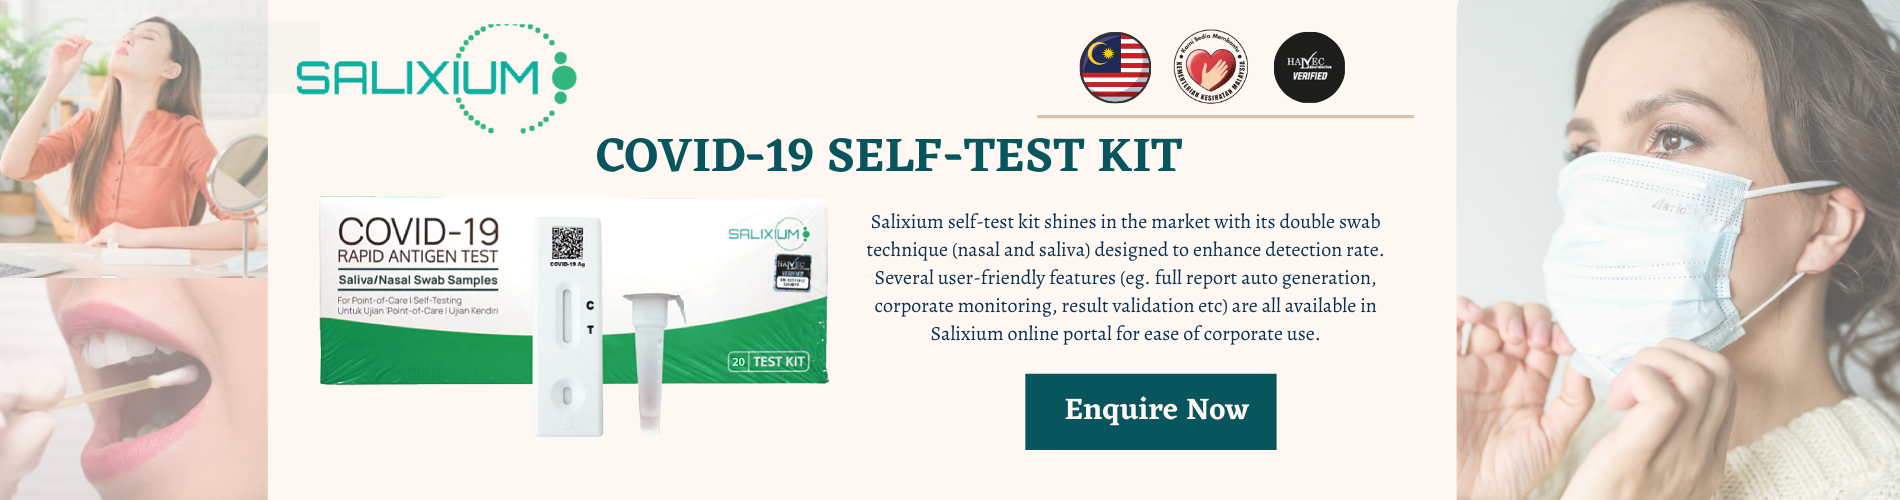 Salixium Covid-19 Self Test Kit